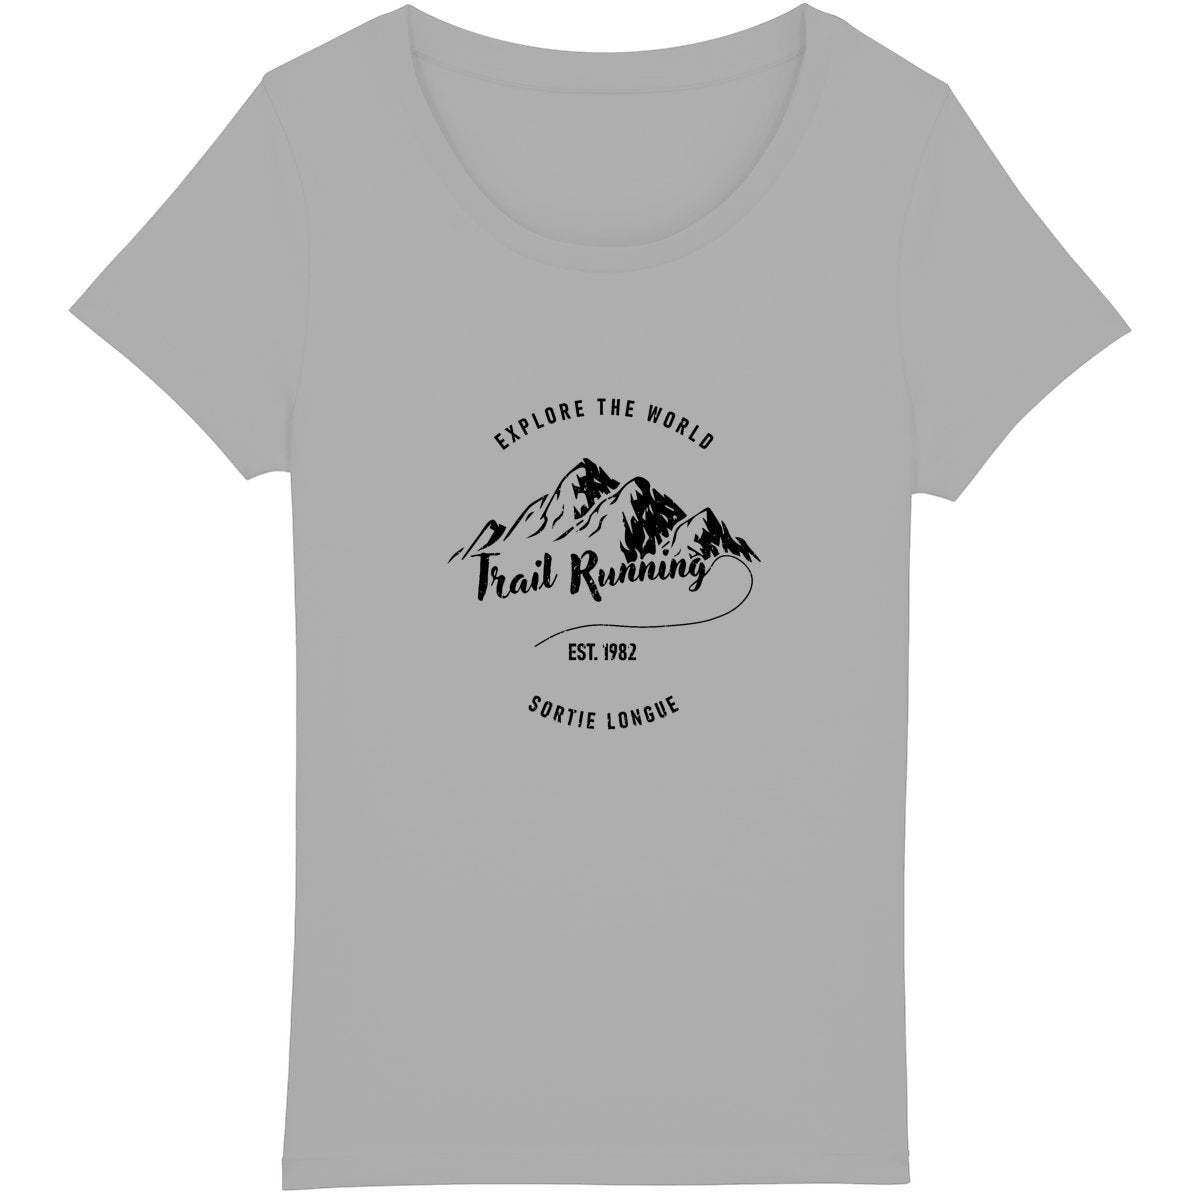 T-shirt féminin en coton bio avec le slogan "Explore the World"